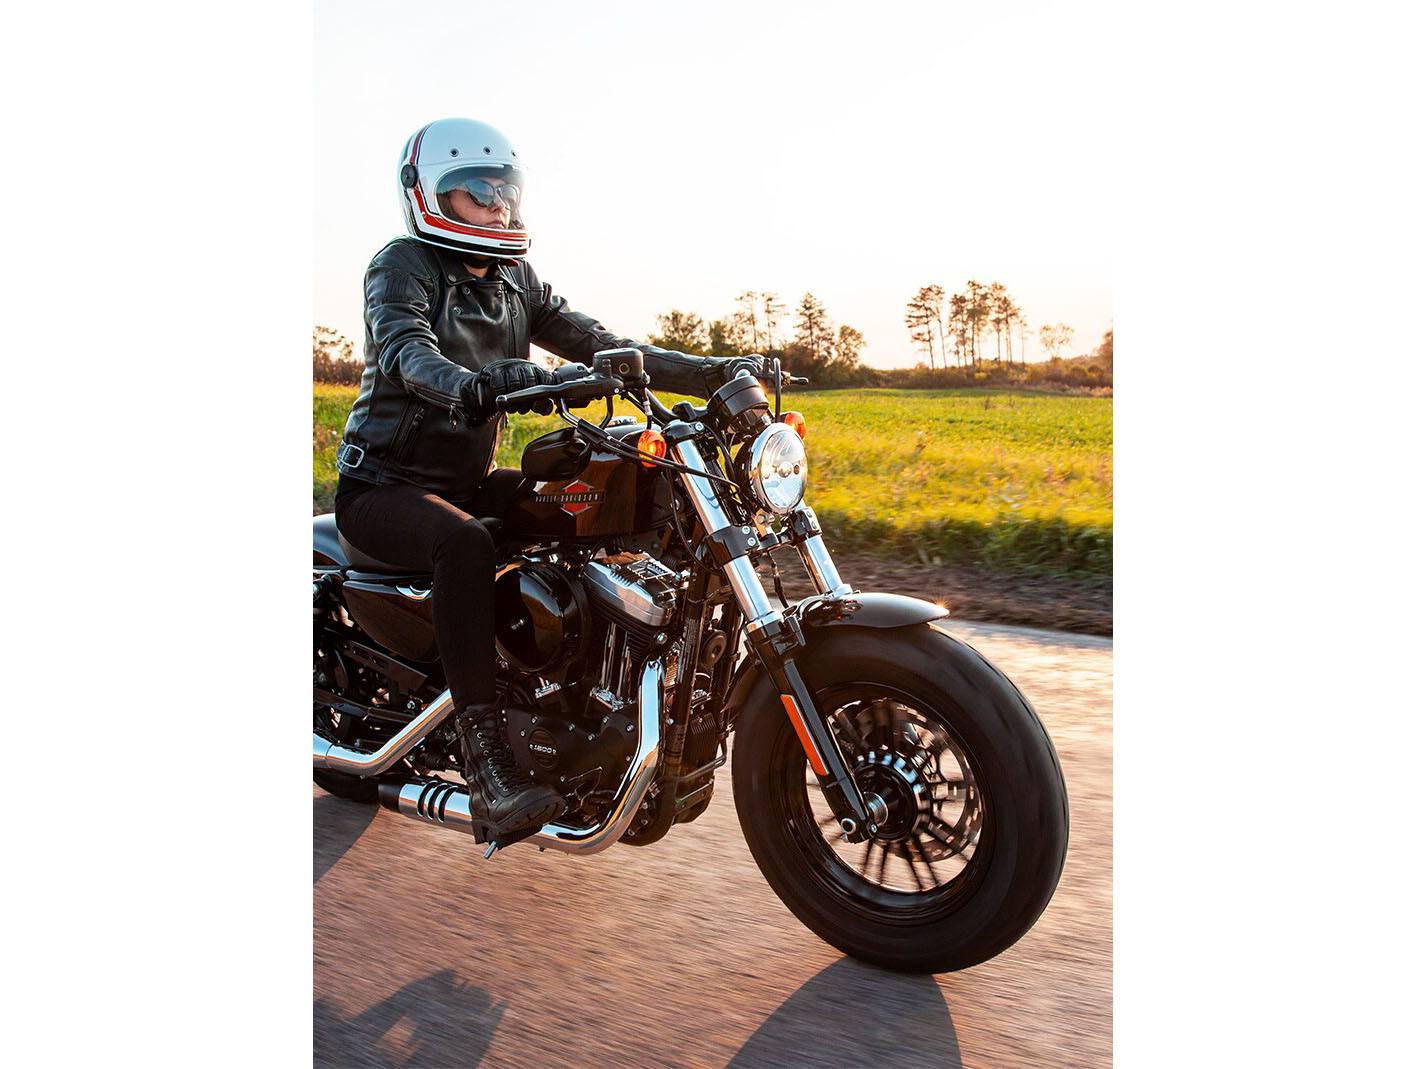 2022 Harley-Davidson Forty-Eight® in Colorado Springs, Colorado - Photo 2